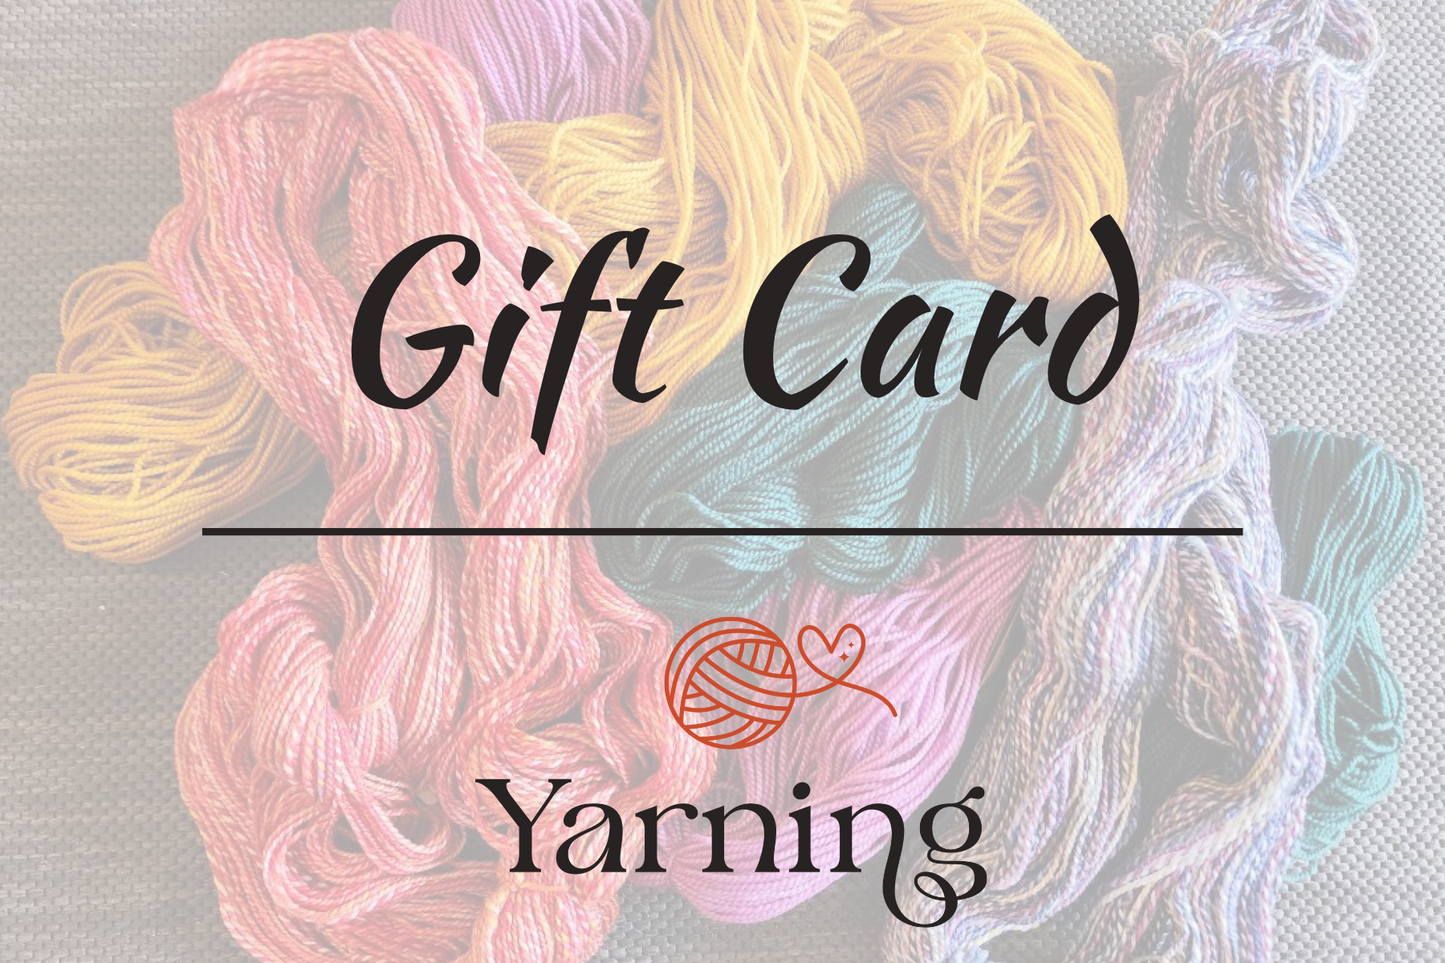 Yarning Gift Card $60 - $150